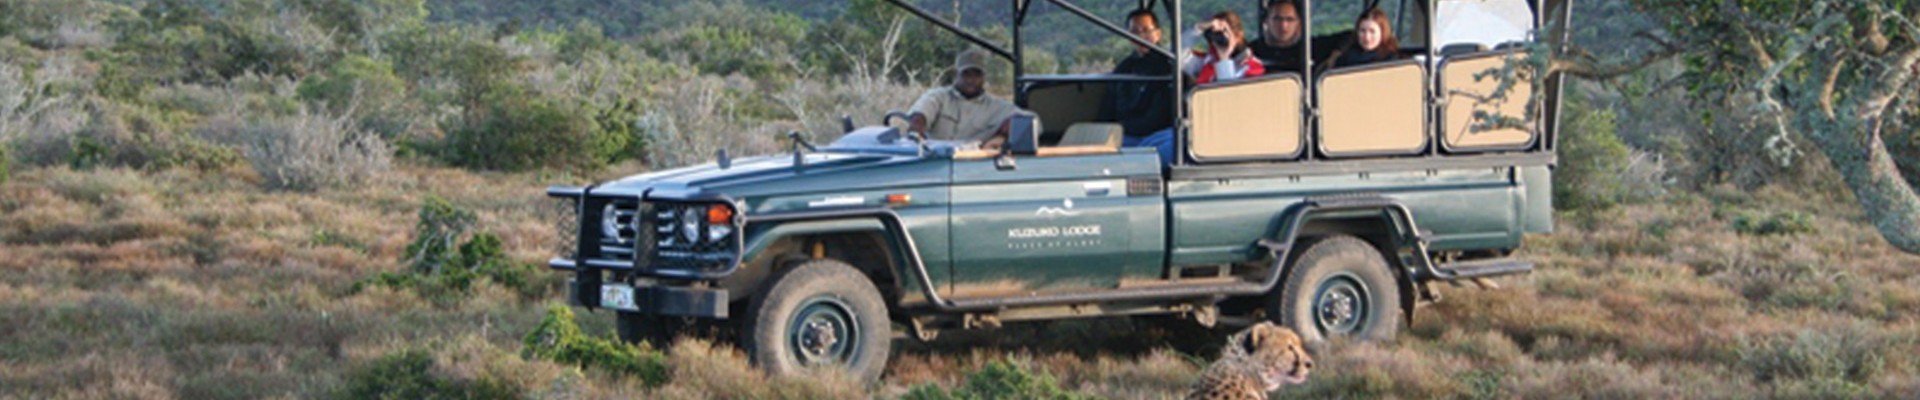 5* Kuzuko Lodge - Greater Addo Elephant National Park Package (2 Nights)